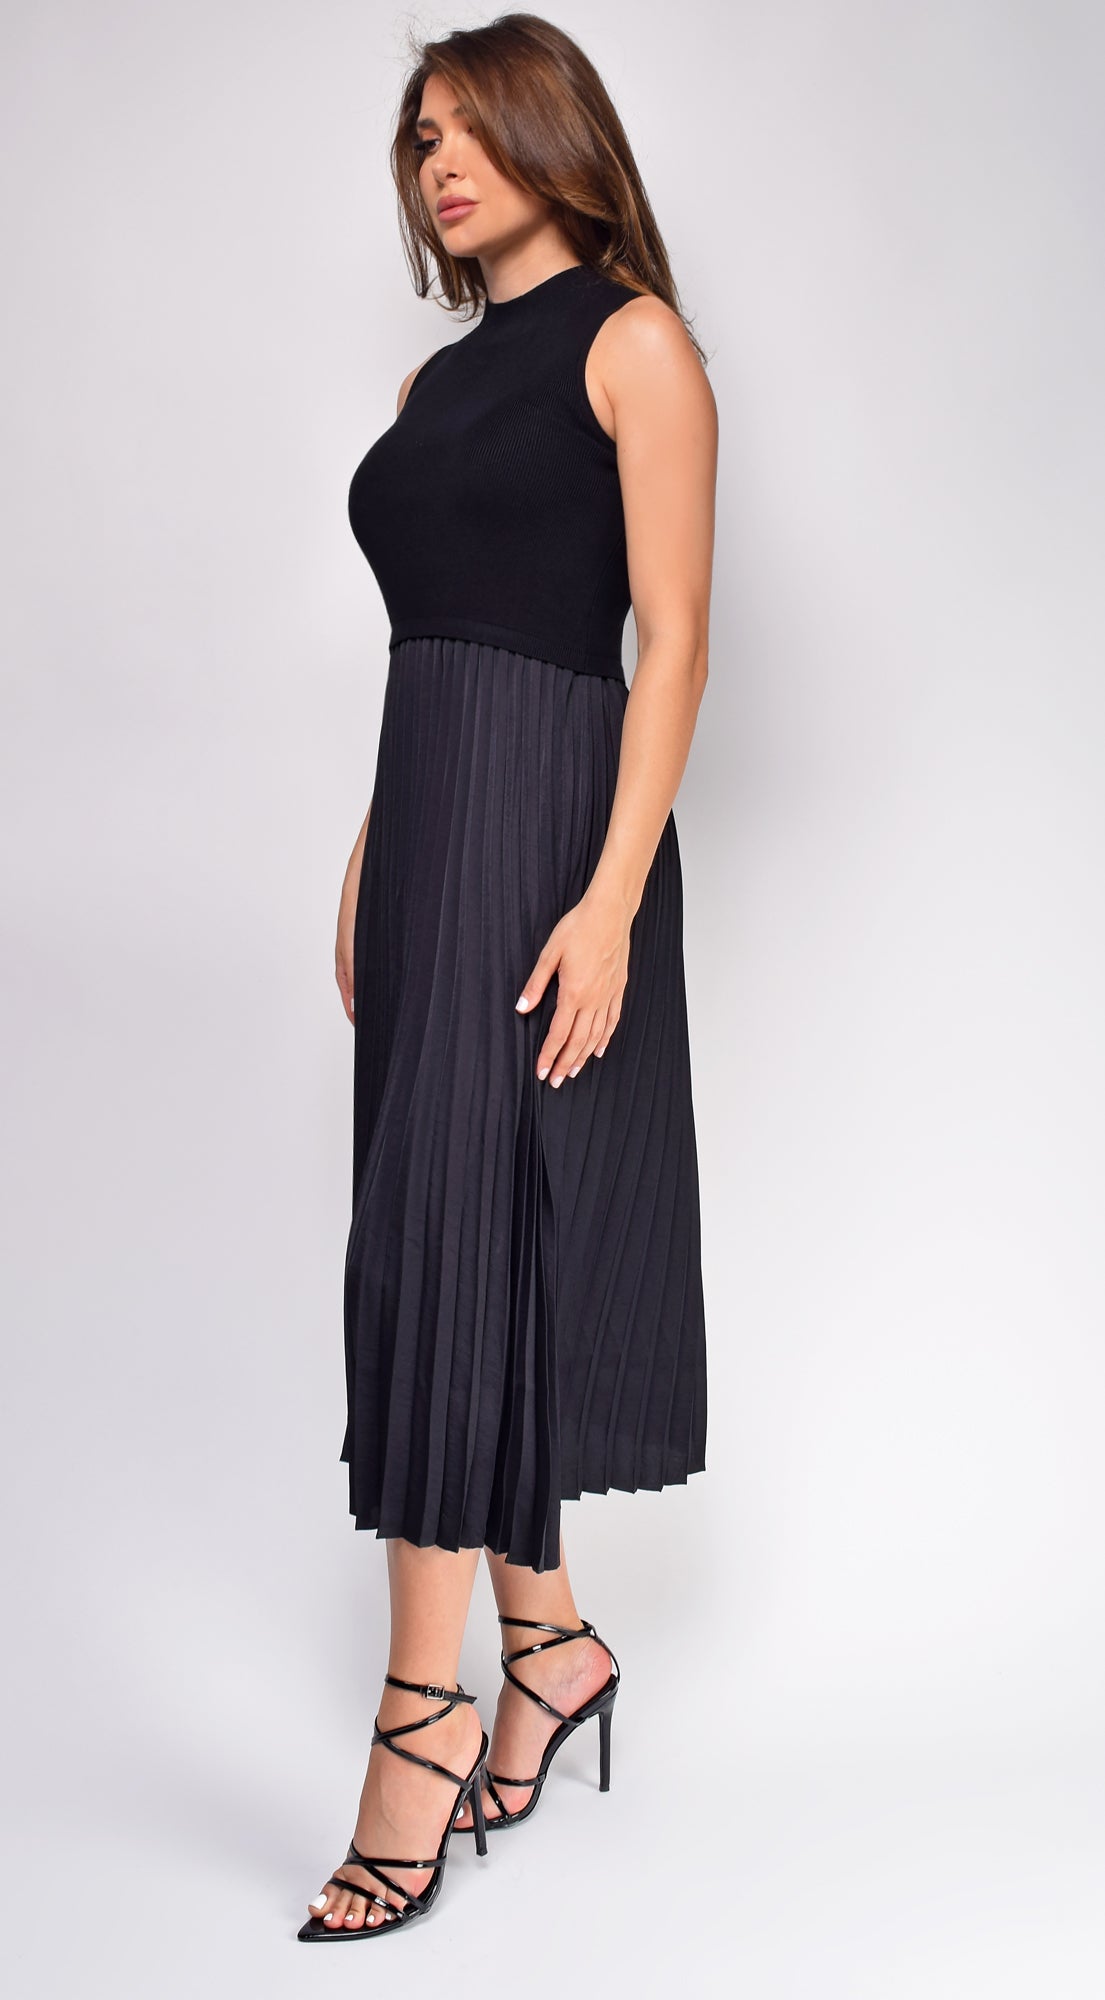 Ashlen Black Pleated Contrast High Neck Midi Dress